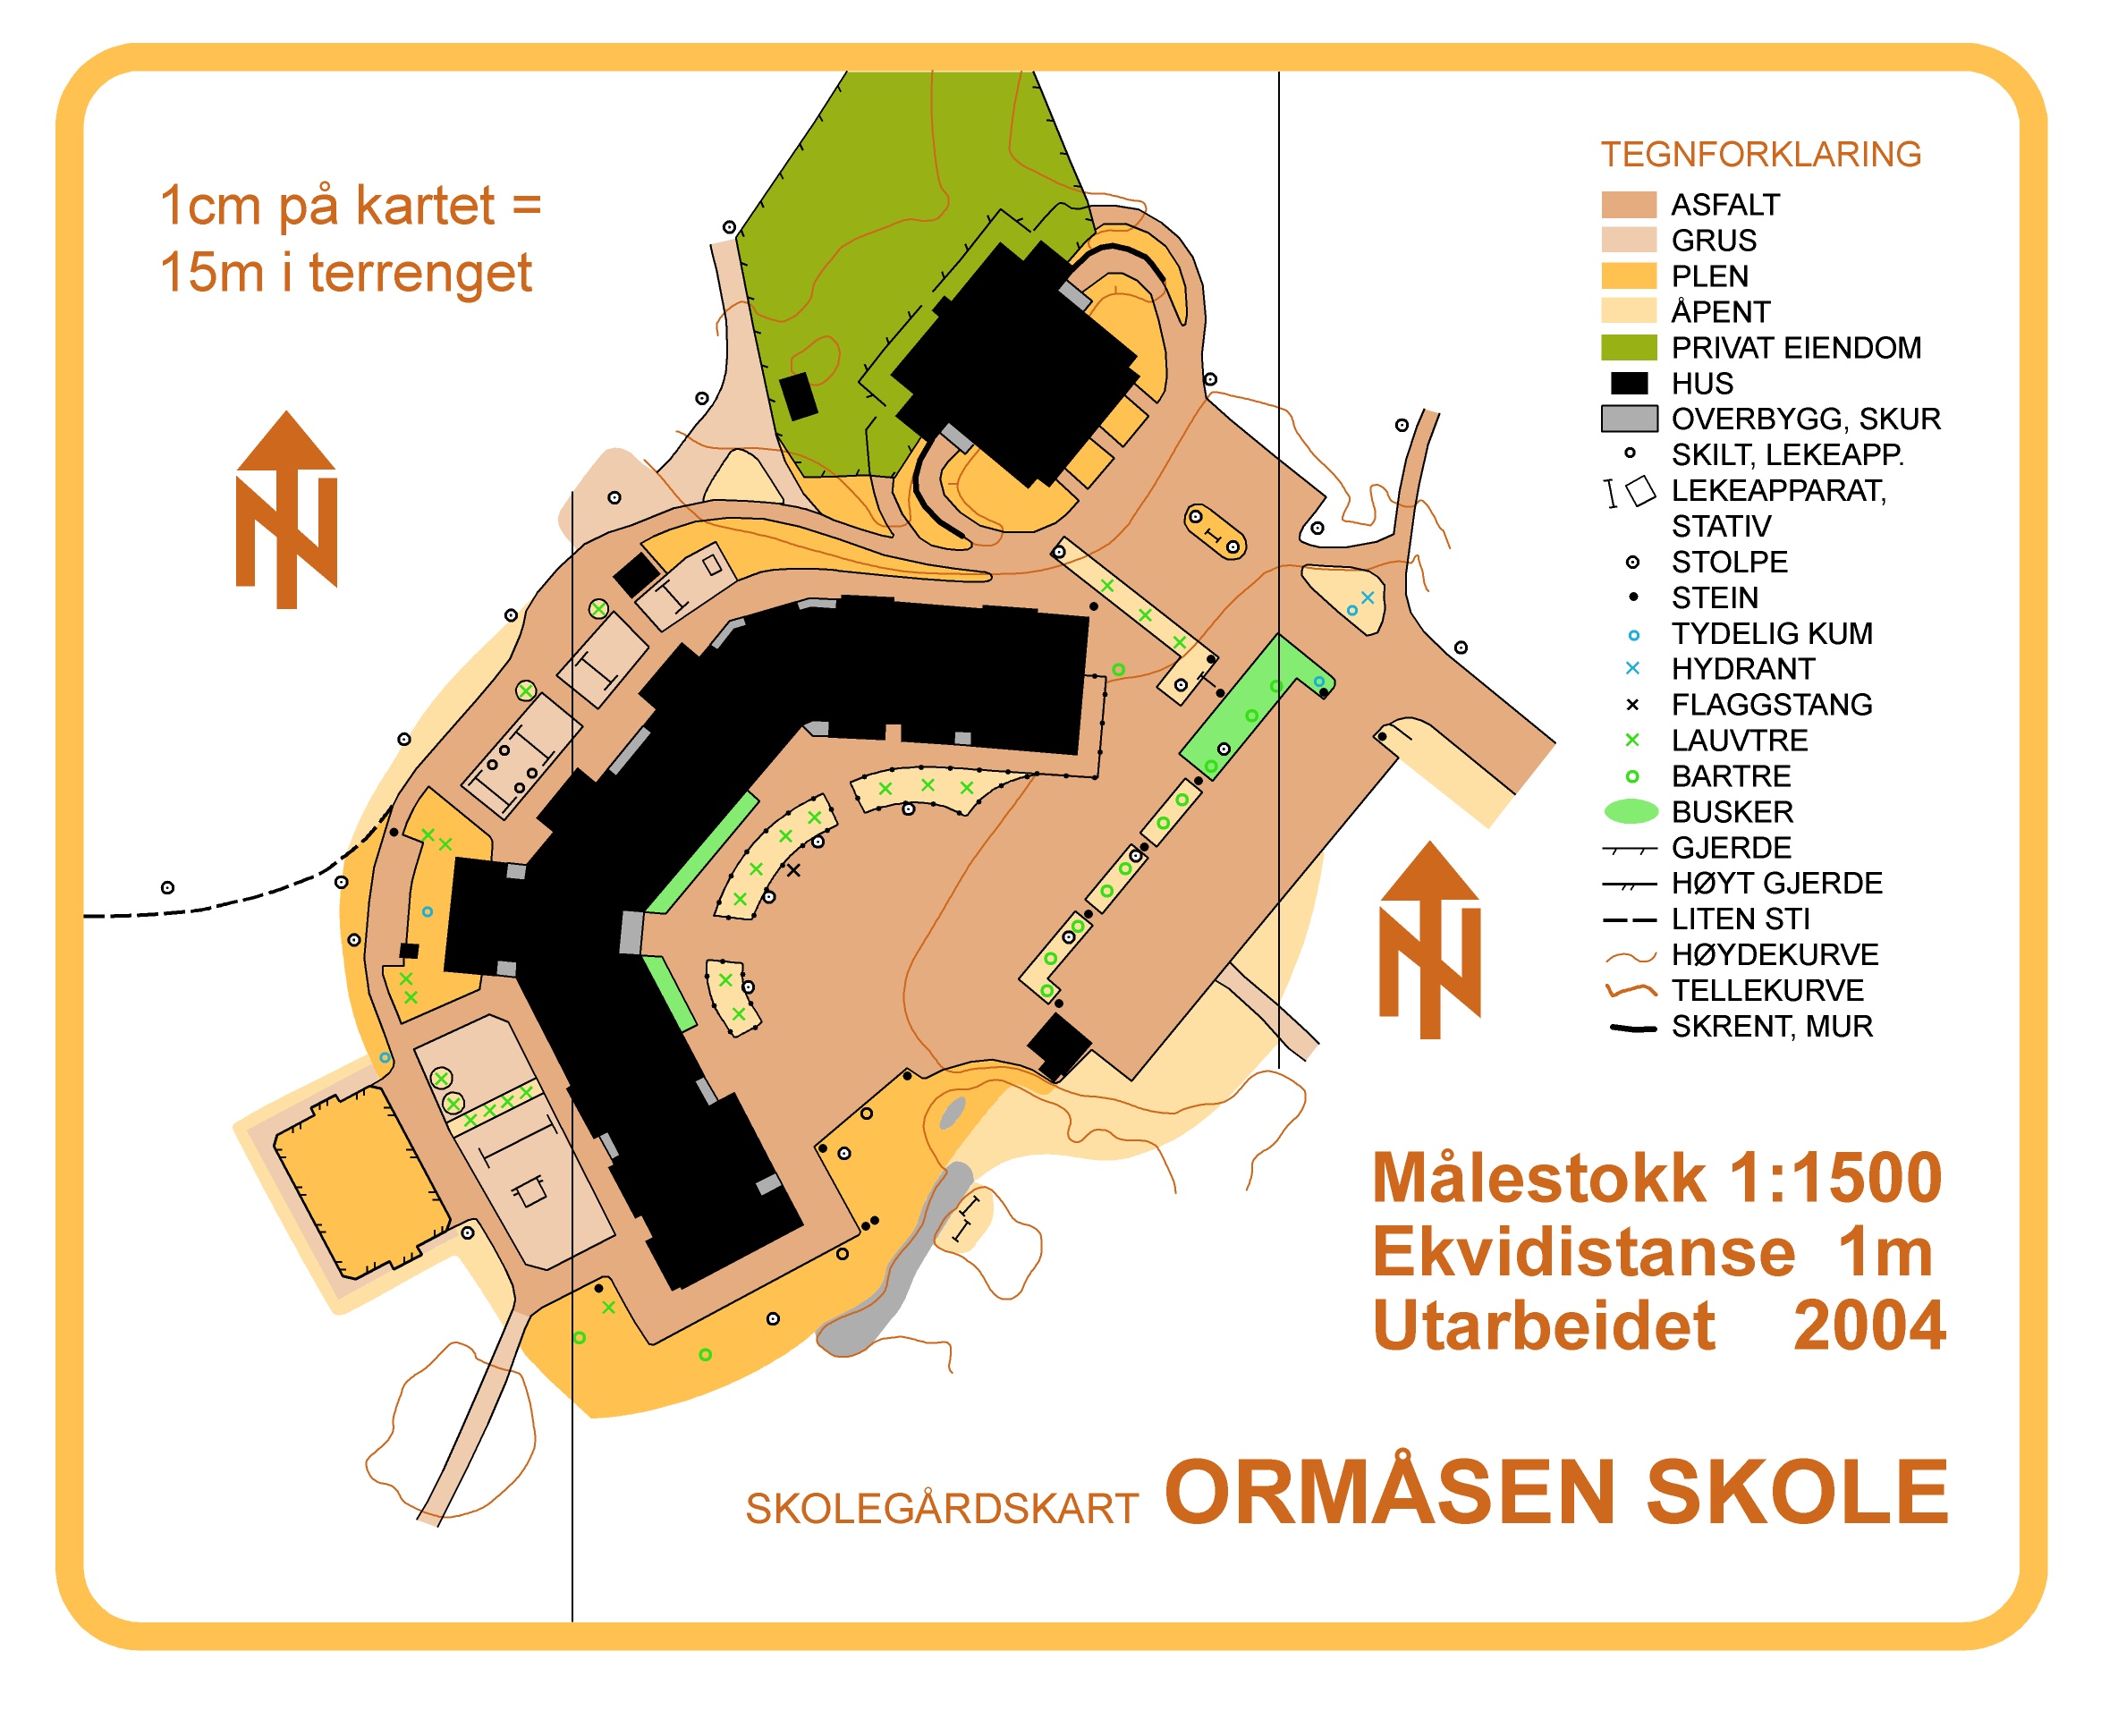 Ormåsen skole (01/01/2004)